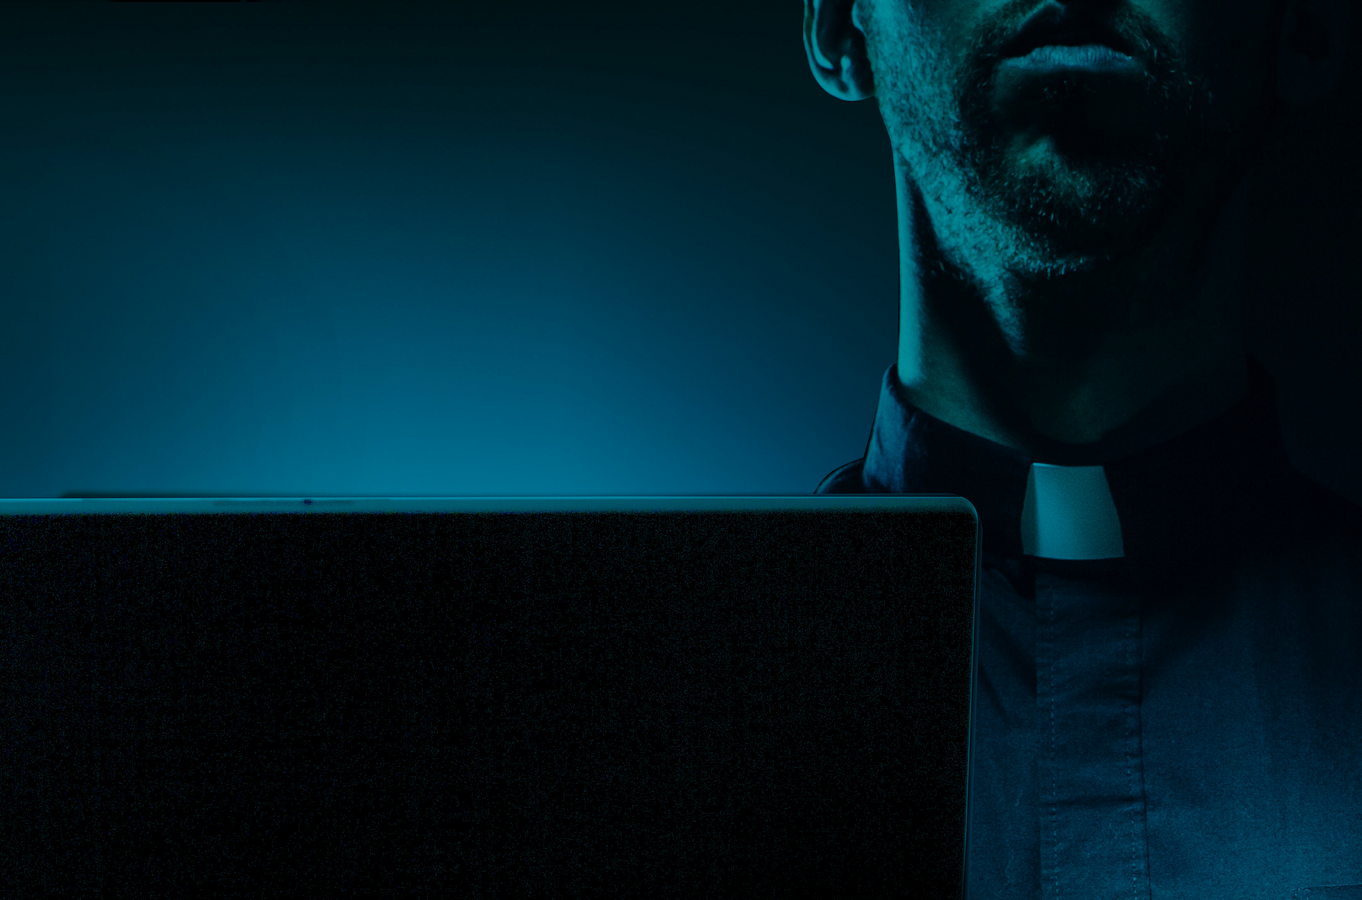 Ru Like Little Porn - Confessions of a Porn-Addicted Priest | America Magazine